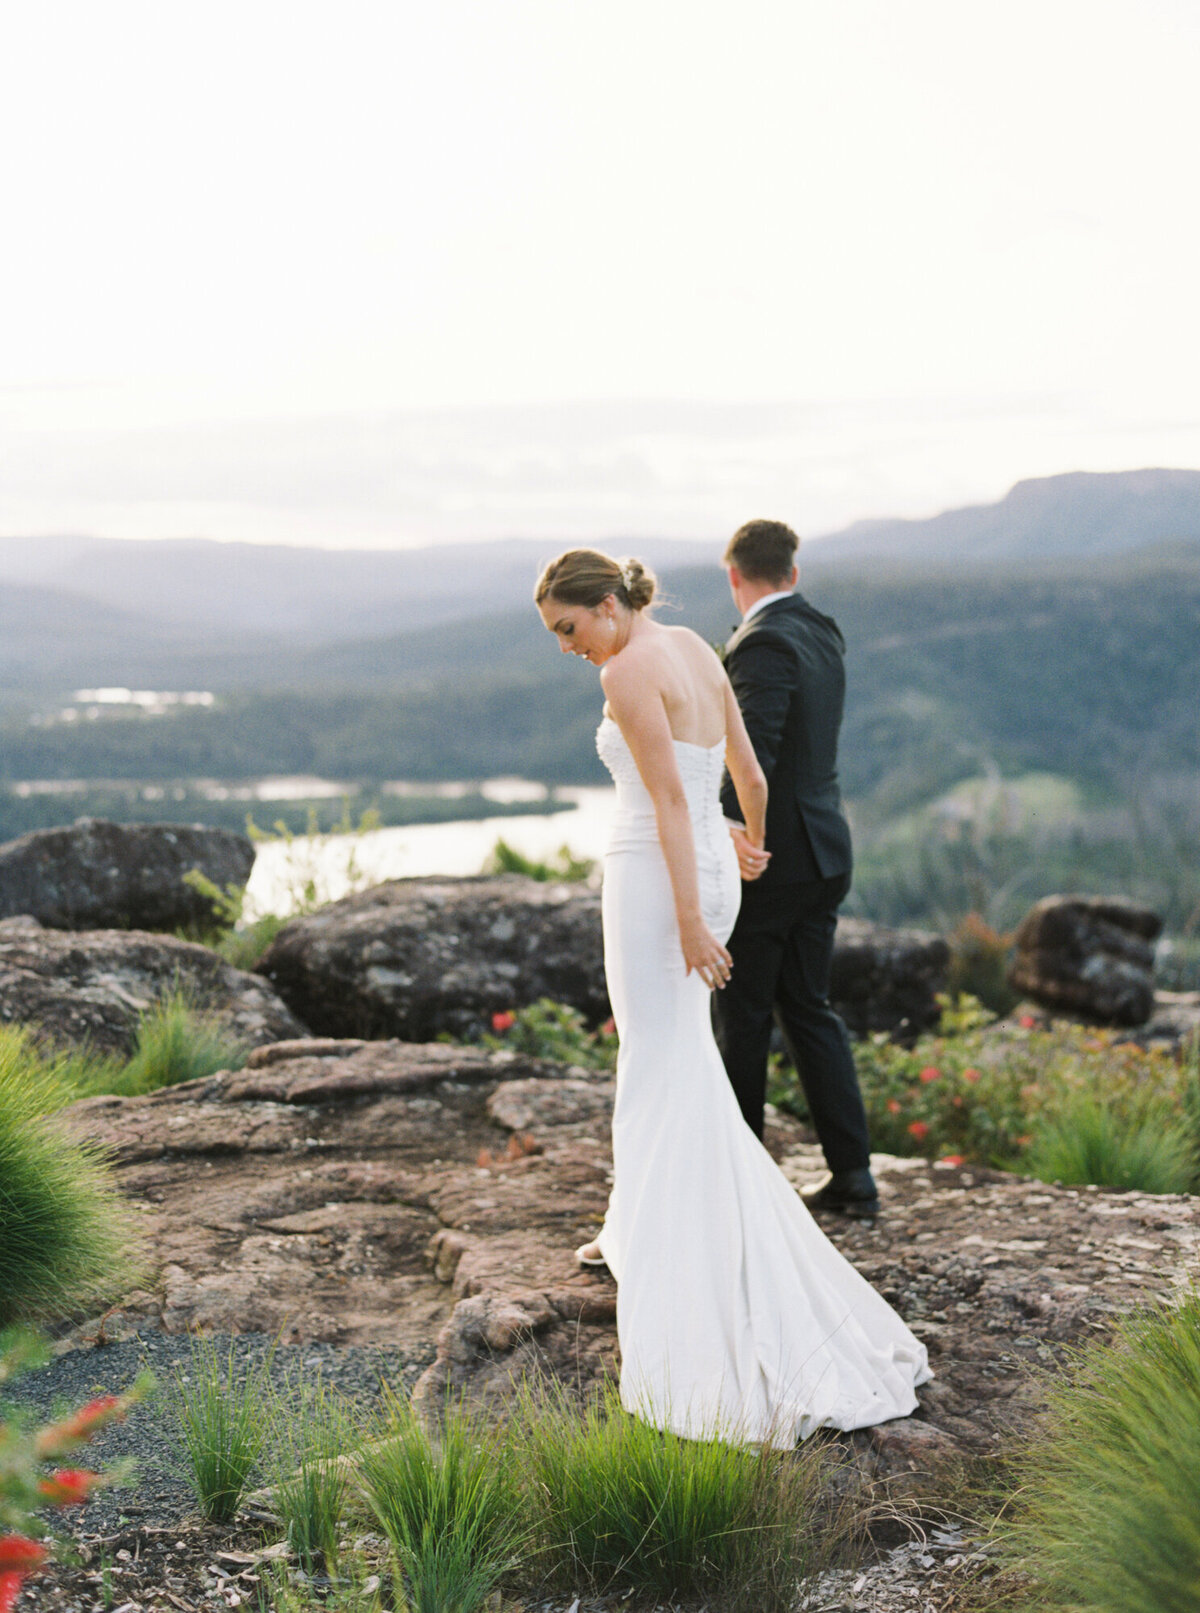 Southern Highlands White Luxury Country Olive Grove Wedding by Fine Art Film Australia Destination Wedding Photographer Sheri McMahon-139